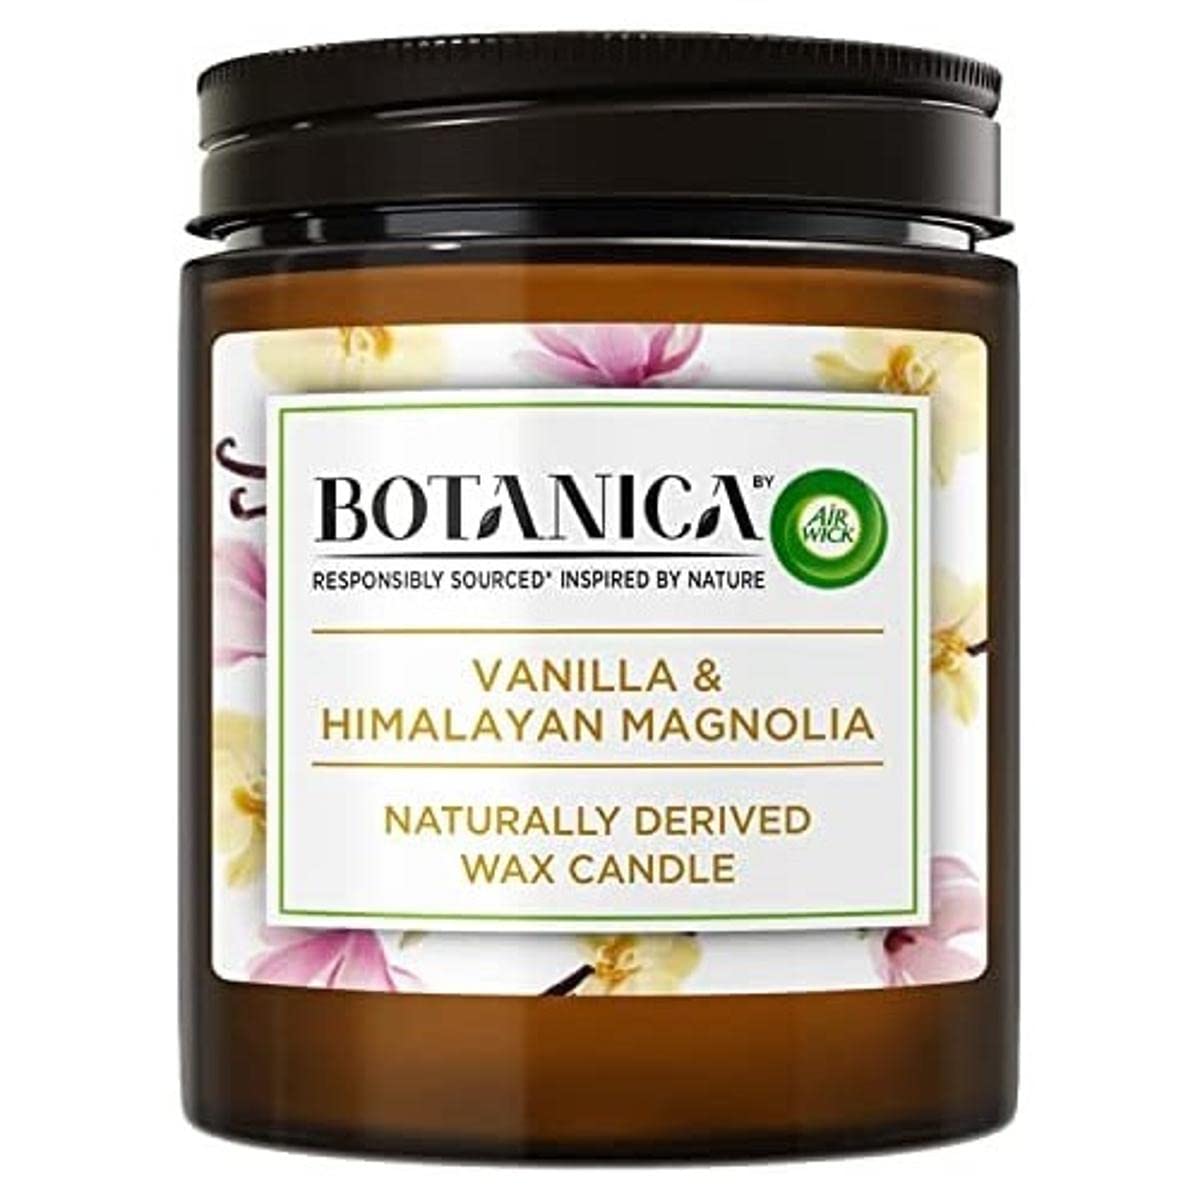 Botanica Wax Candle by Air Wick Air Freshener Naturally Derived Vanilla and Himalayan Magnolia 205 g - liquidation.store